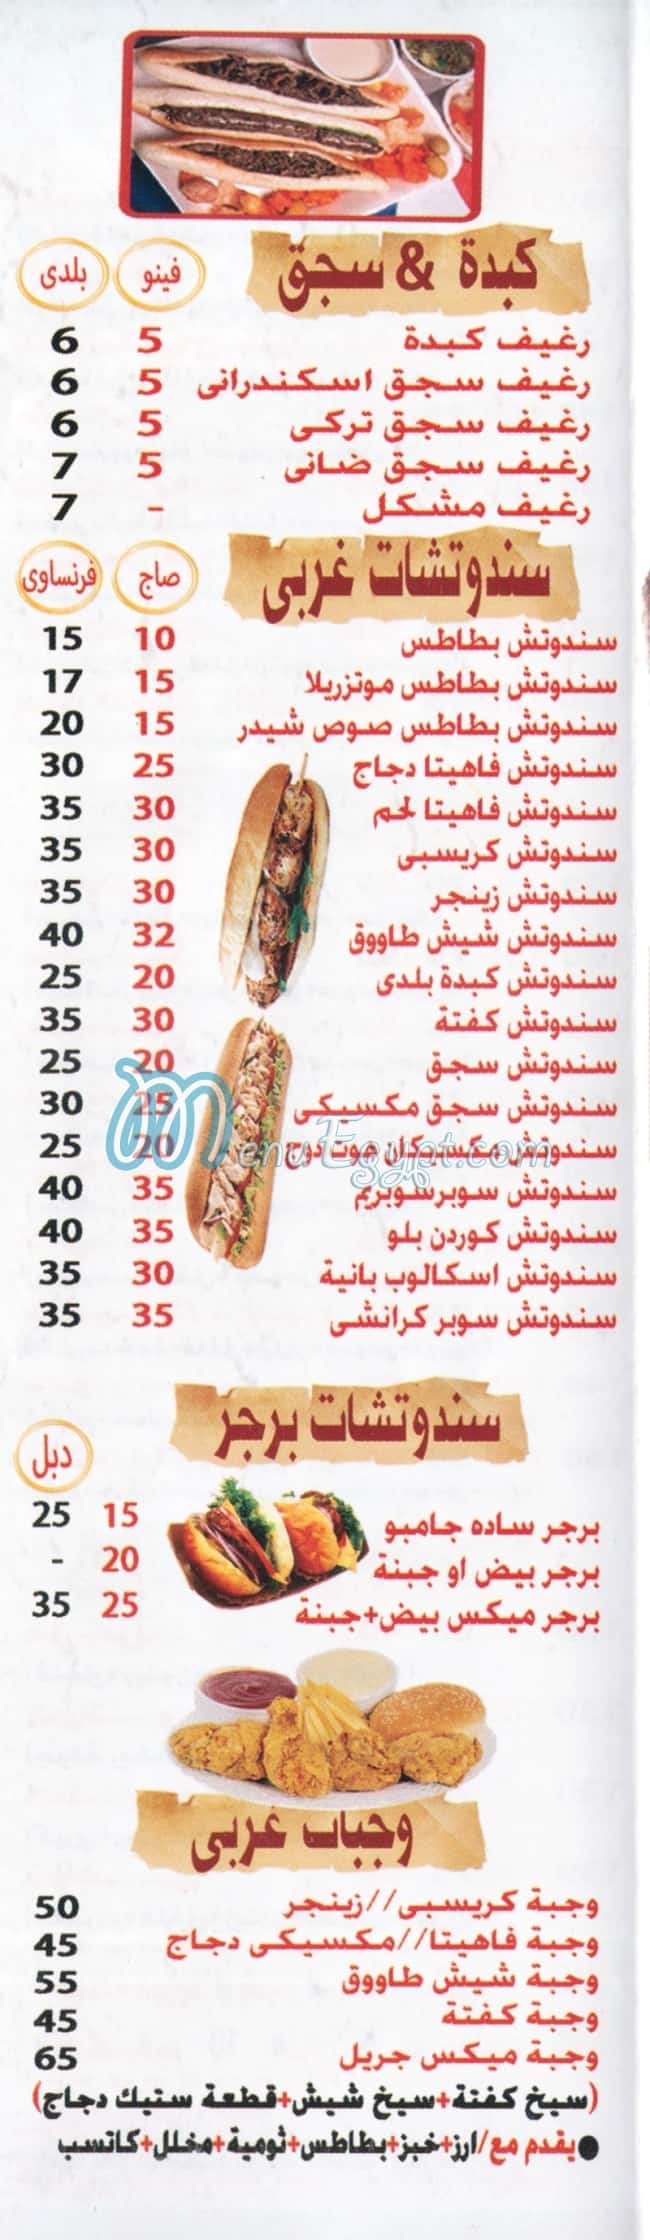 Awlad Ali menu Egypt 1